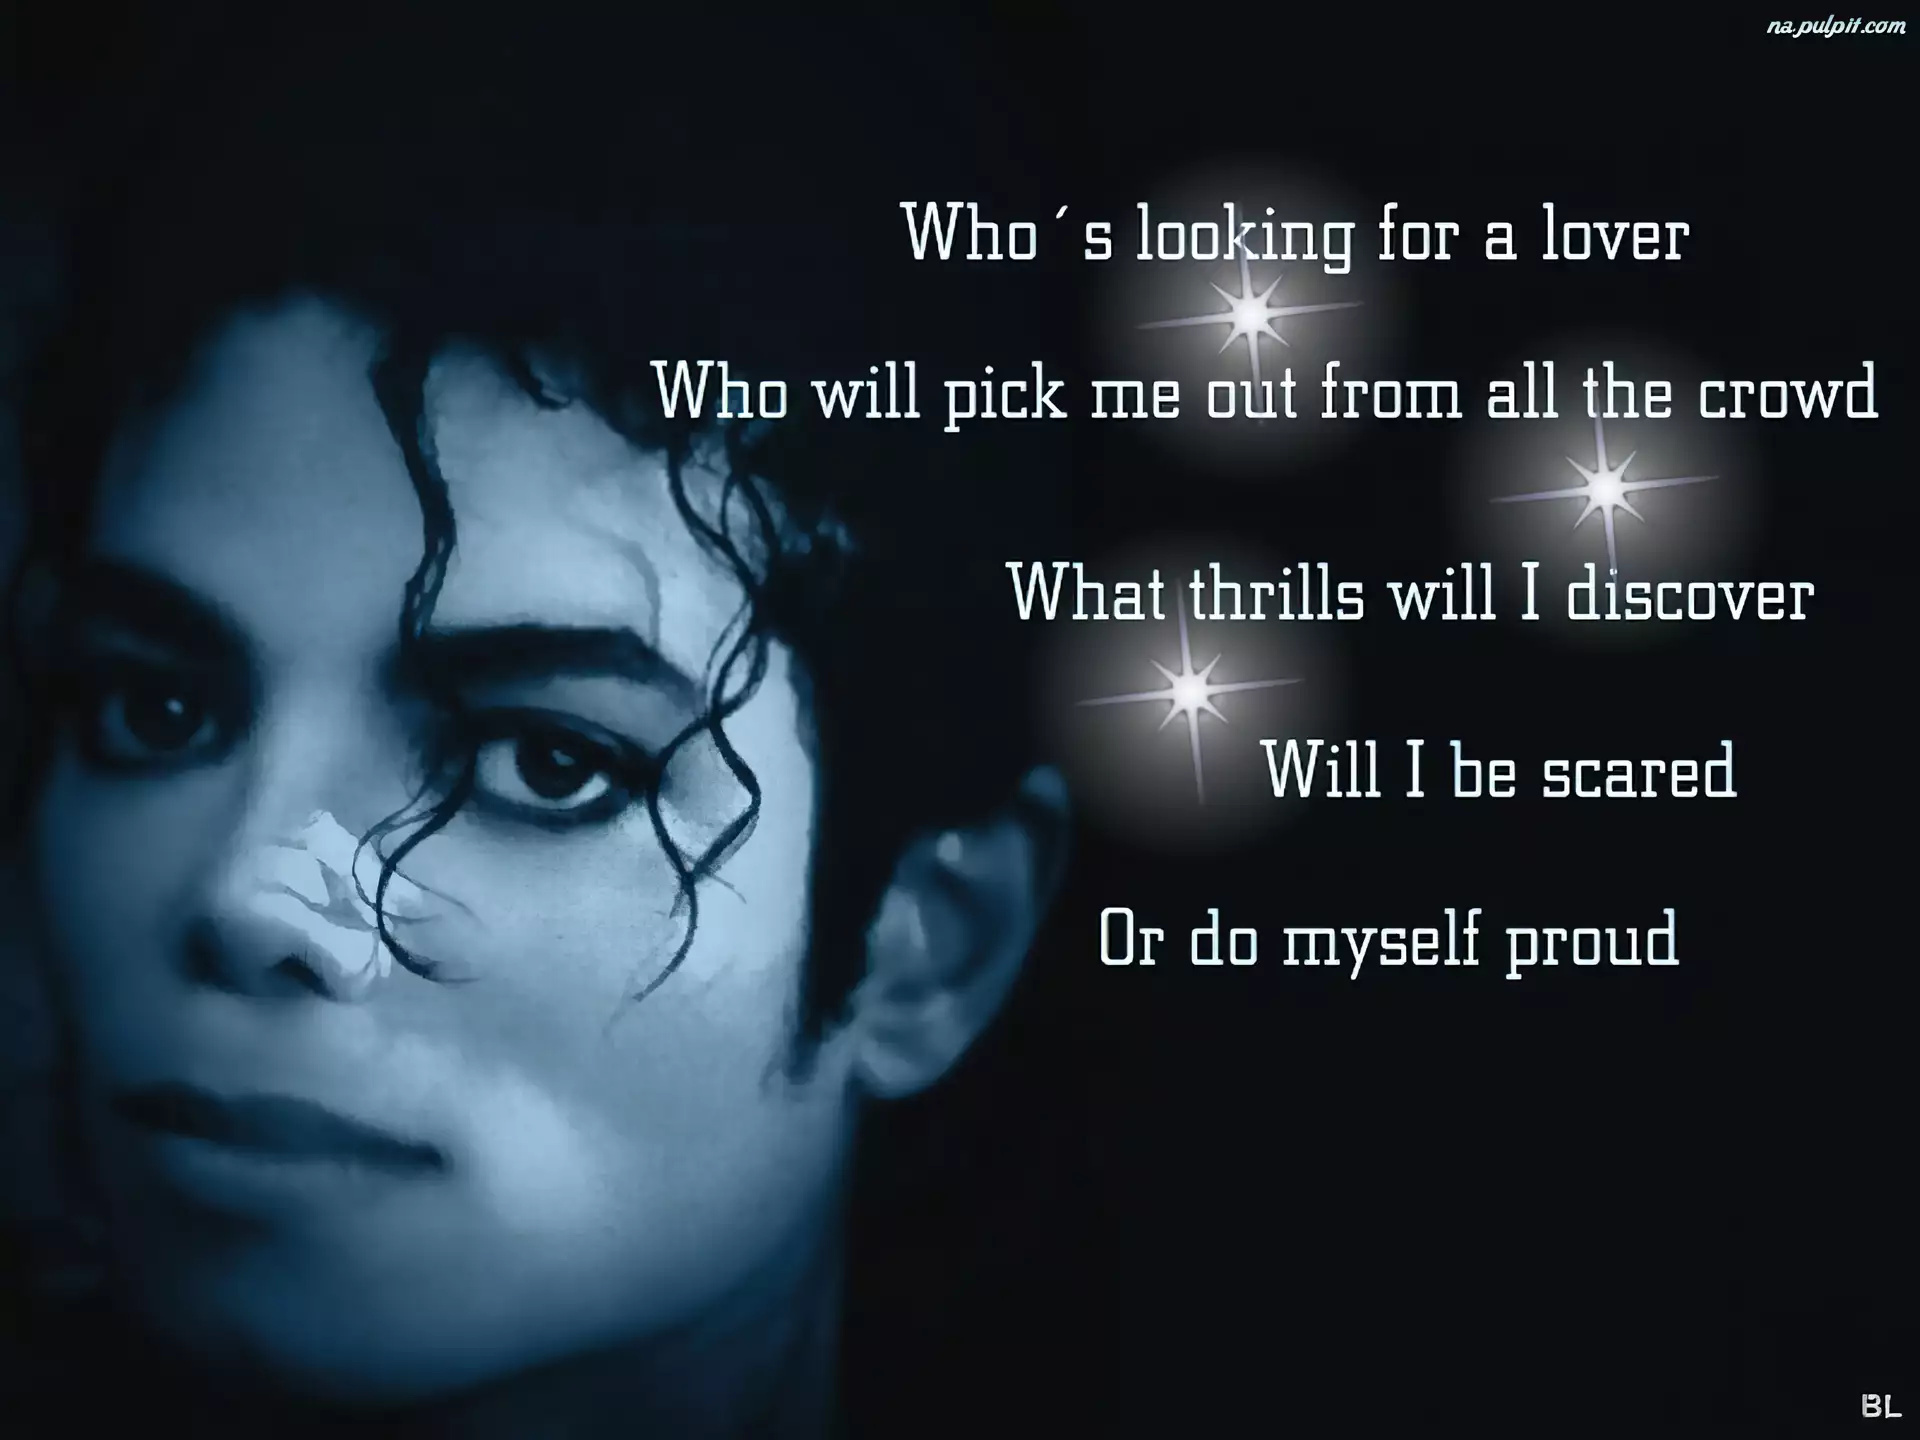 Michaela Jacksona, Buzia